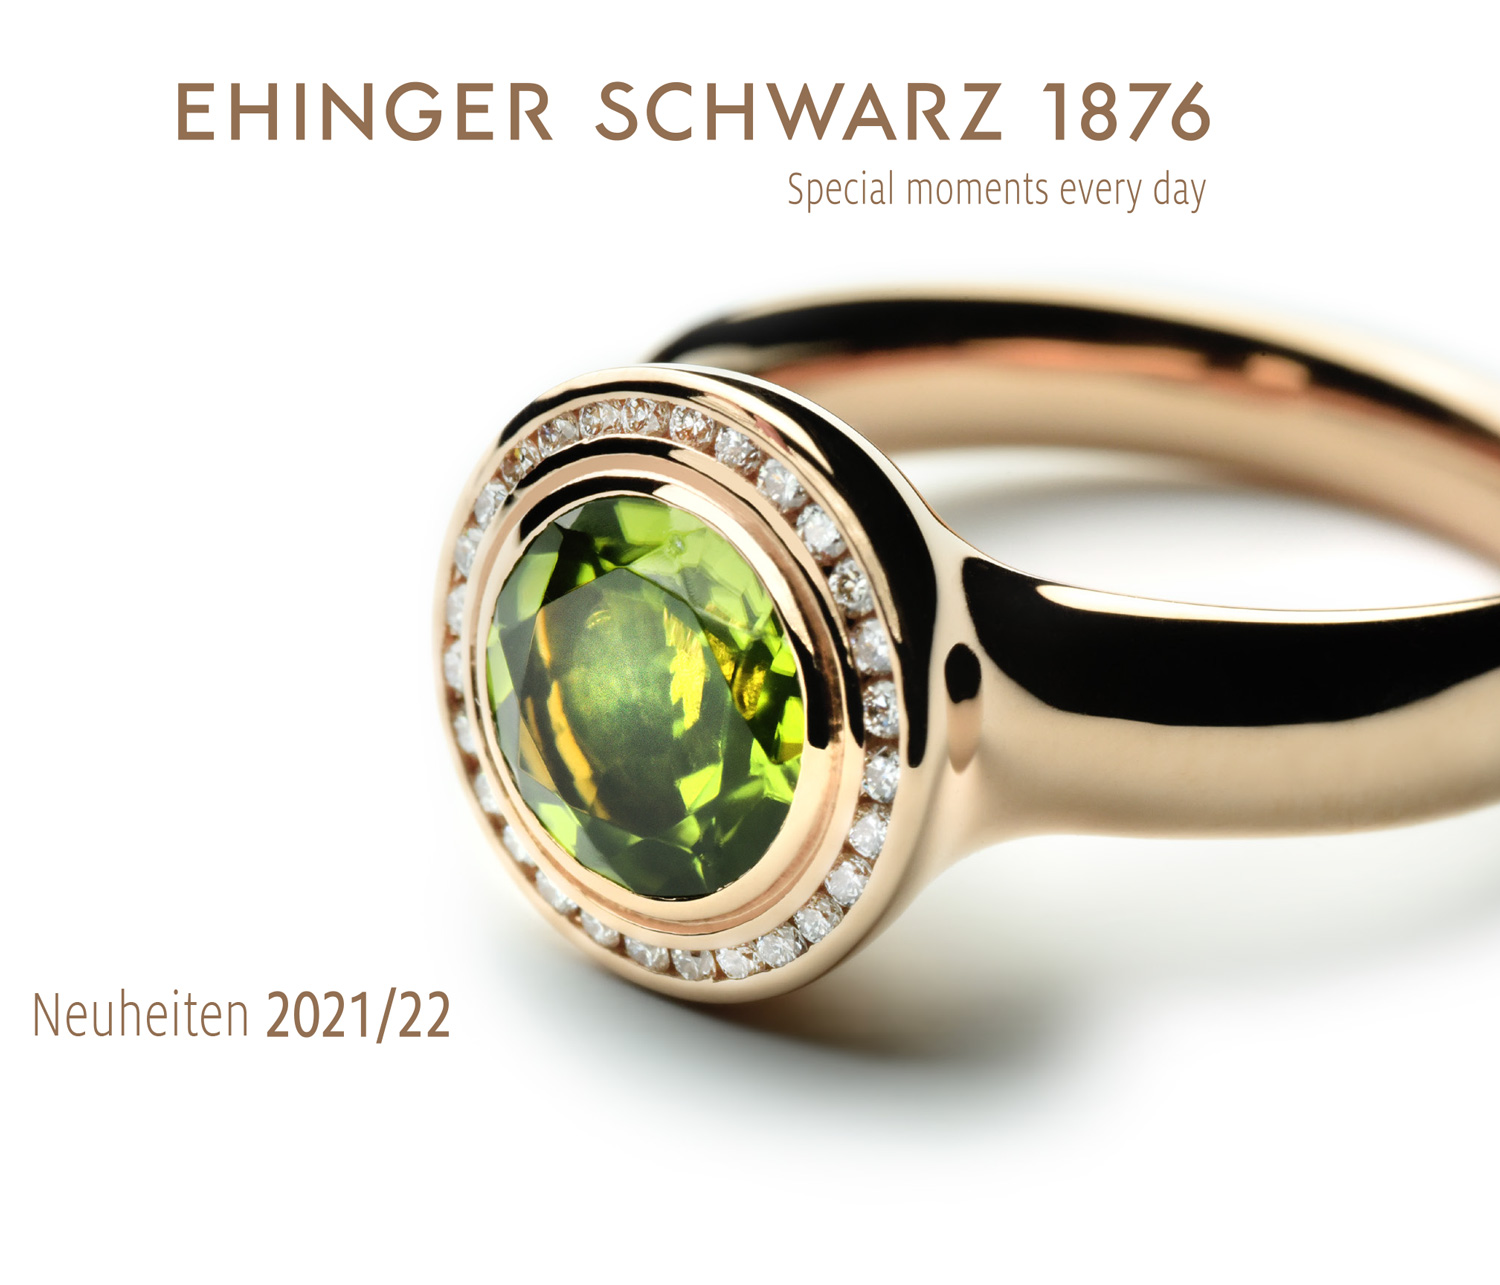 ehinger-schwarz-1876-catalogue-2022